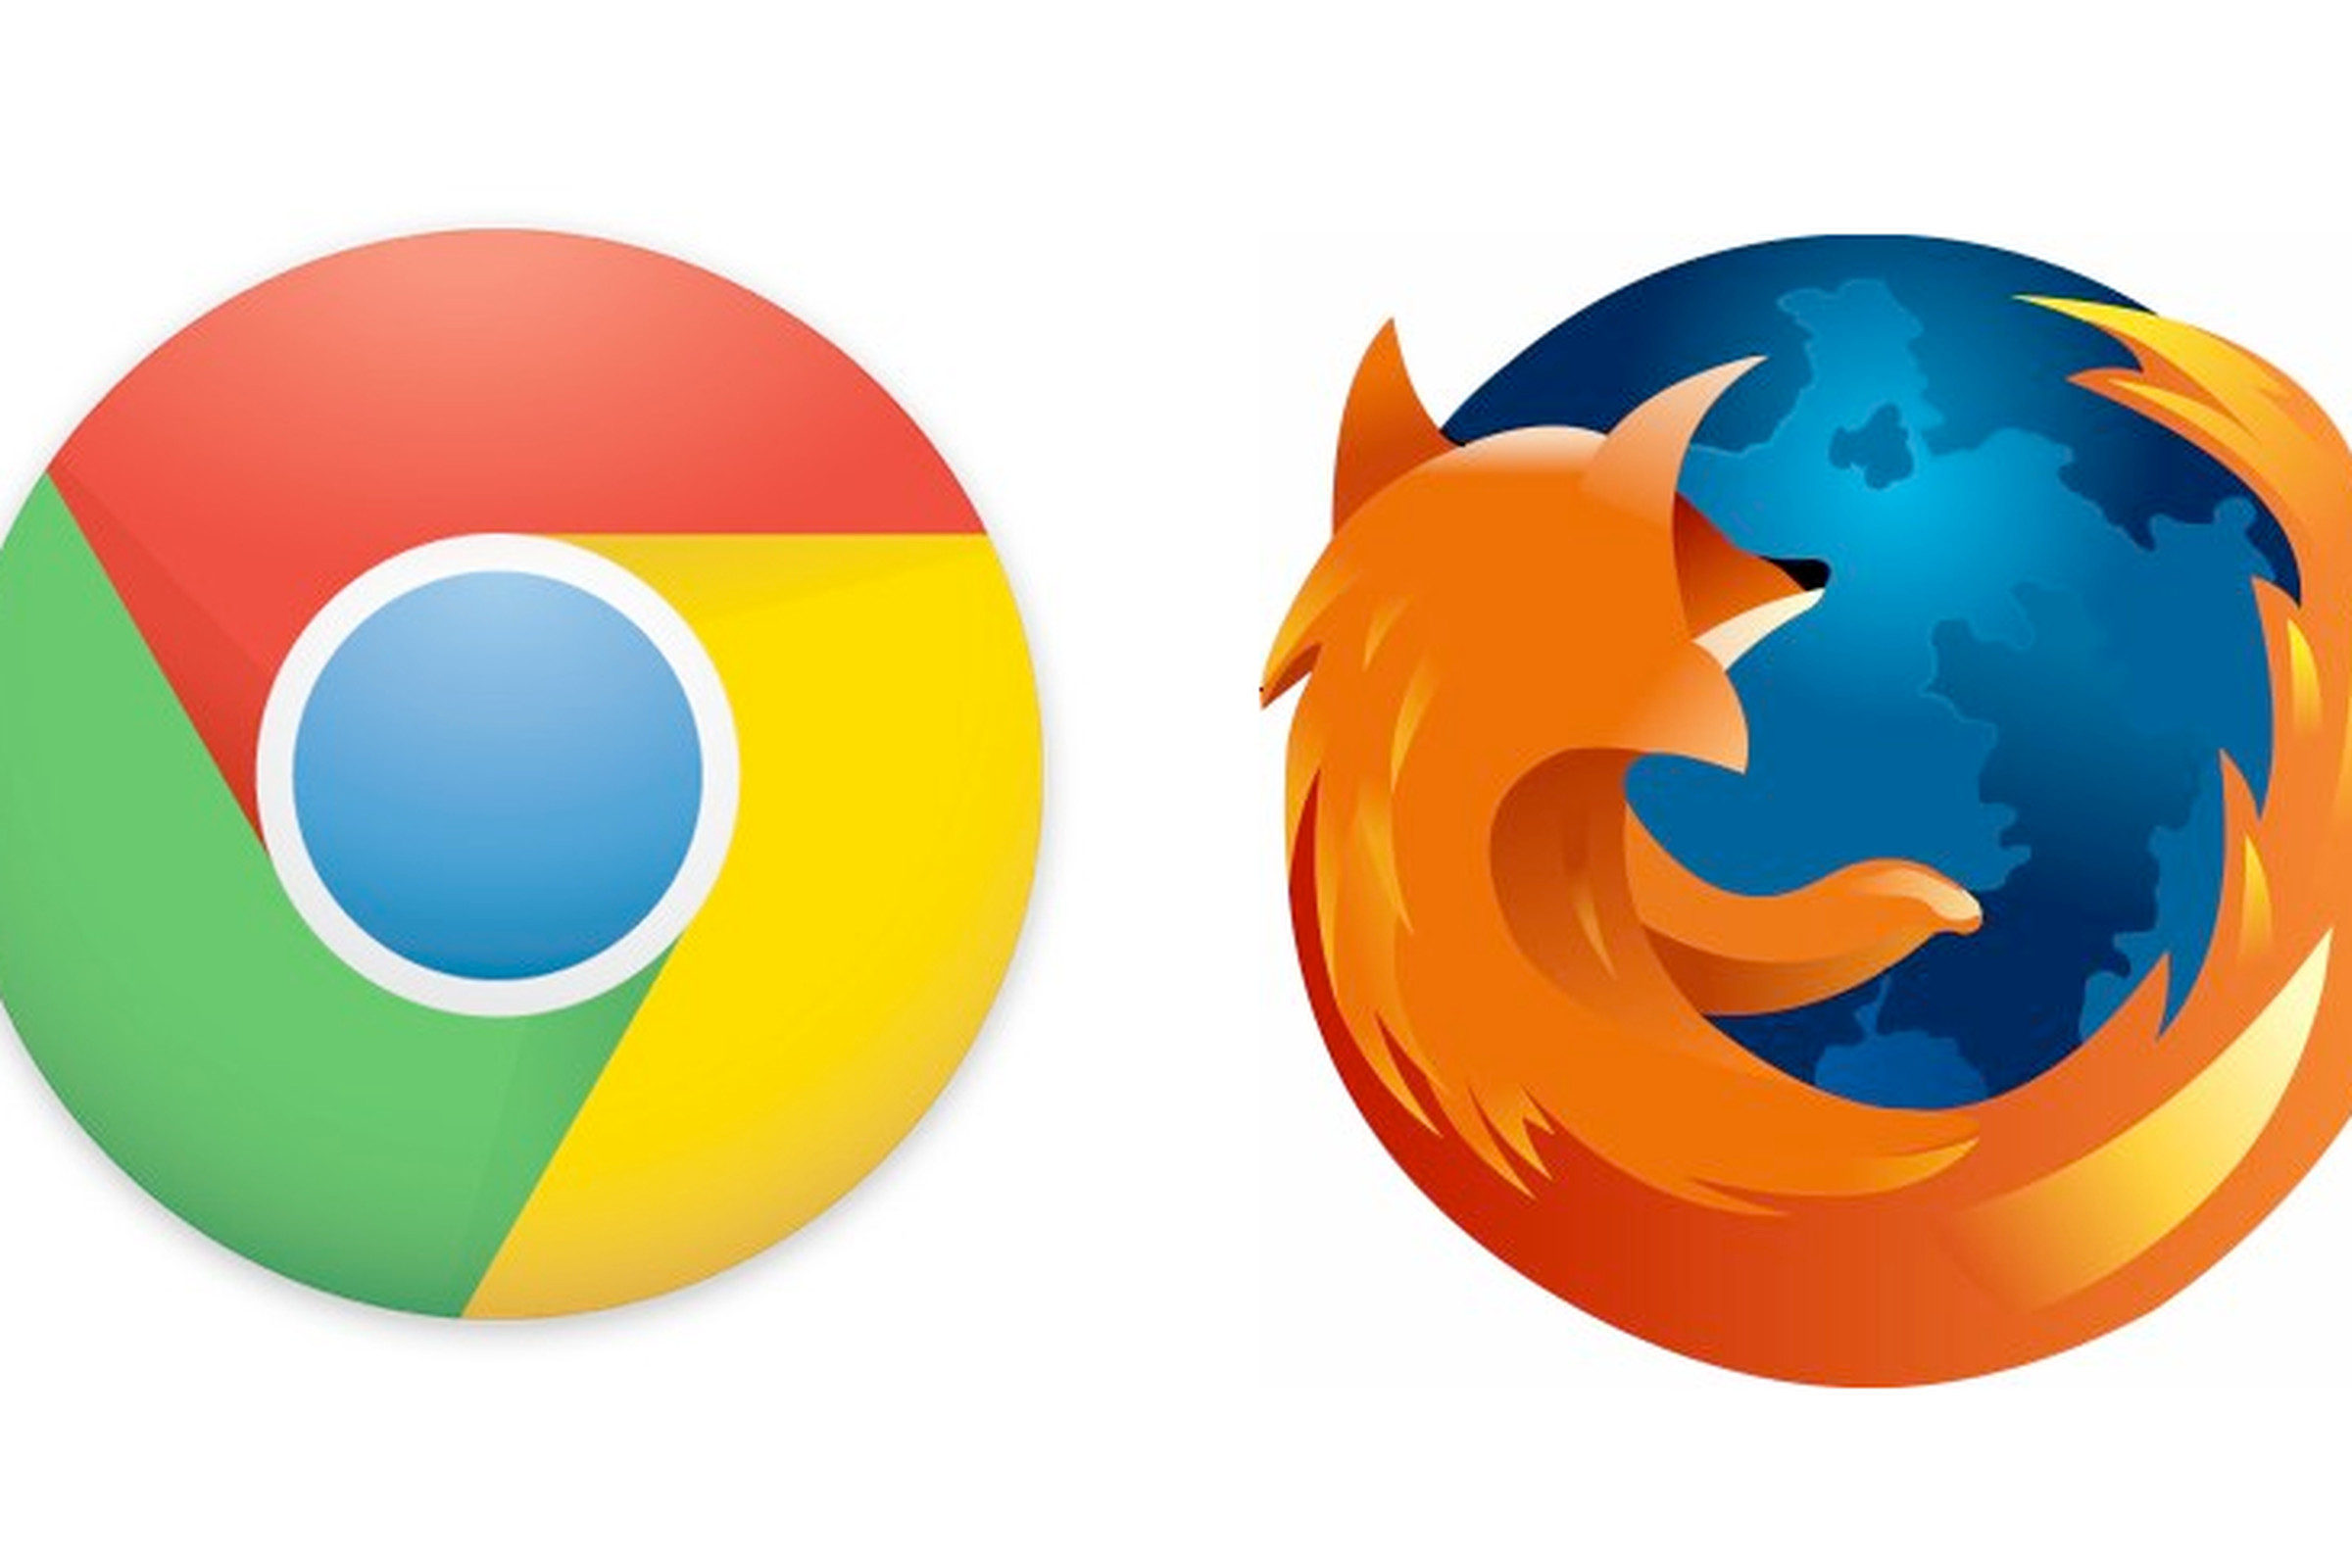 Chrome and Firefox logos